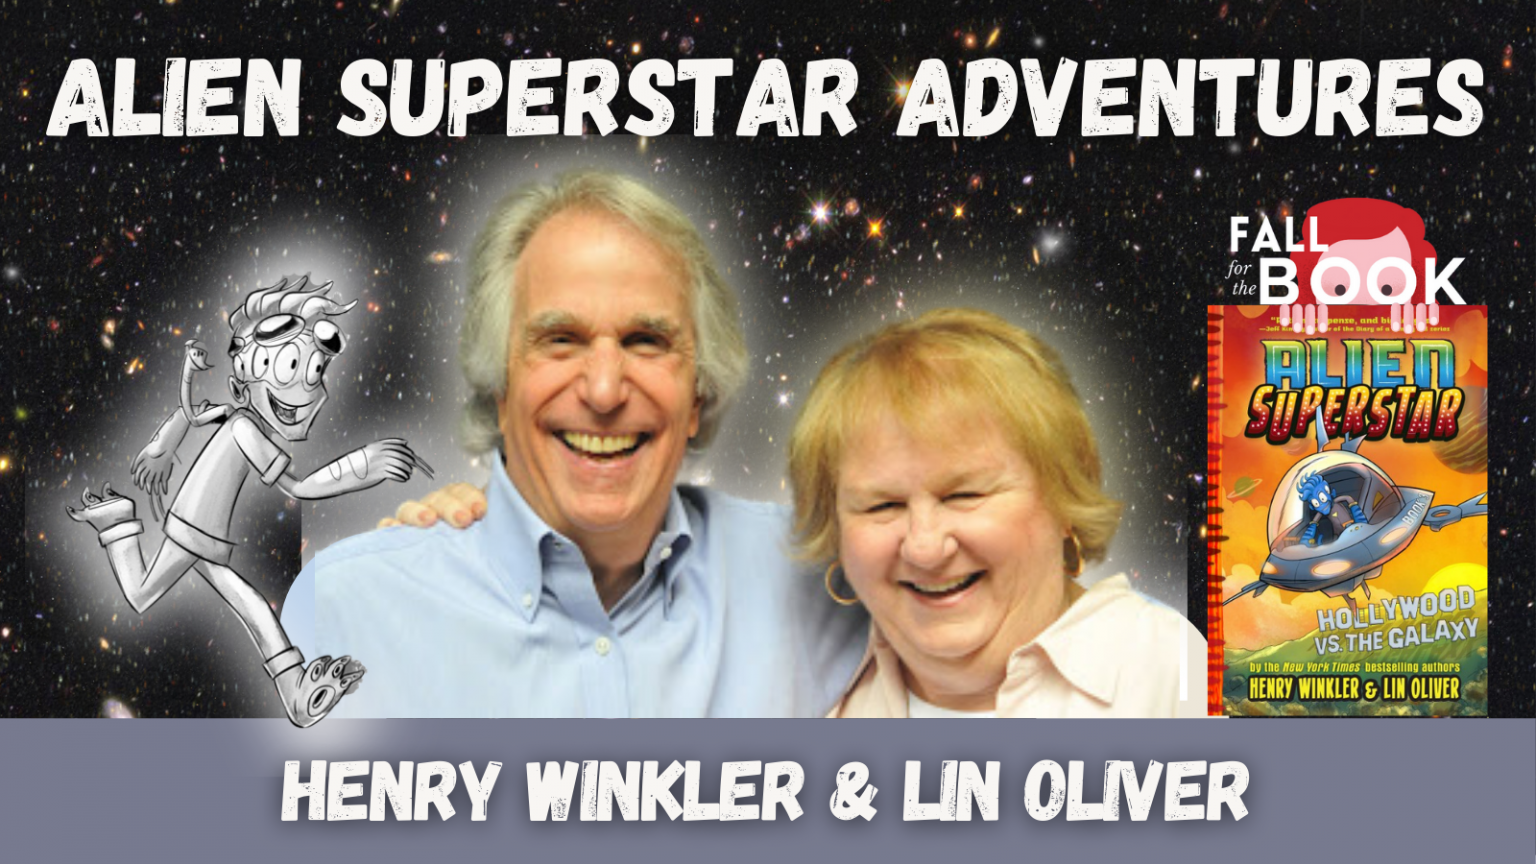 Henry Winkler & Lin Oliver